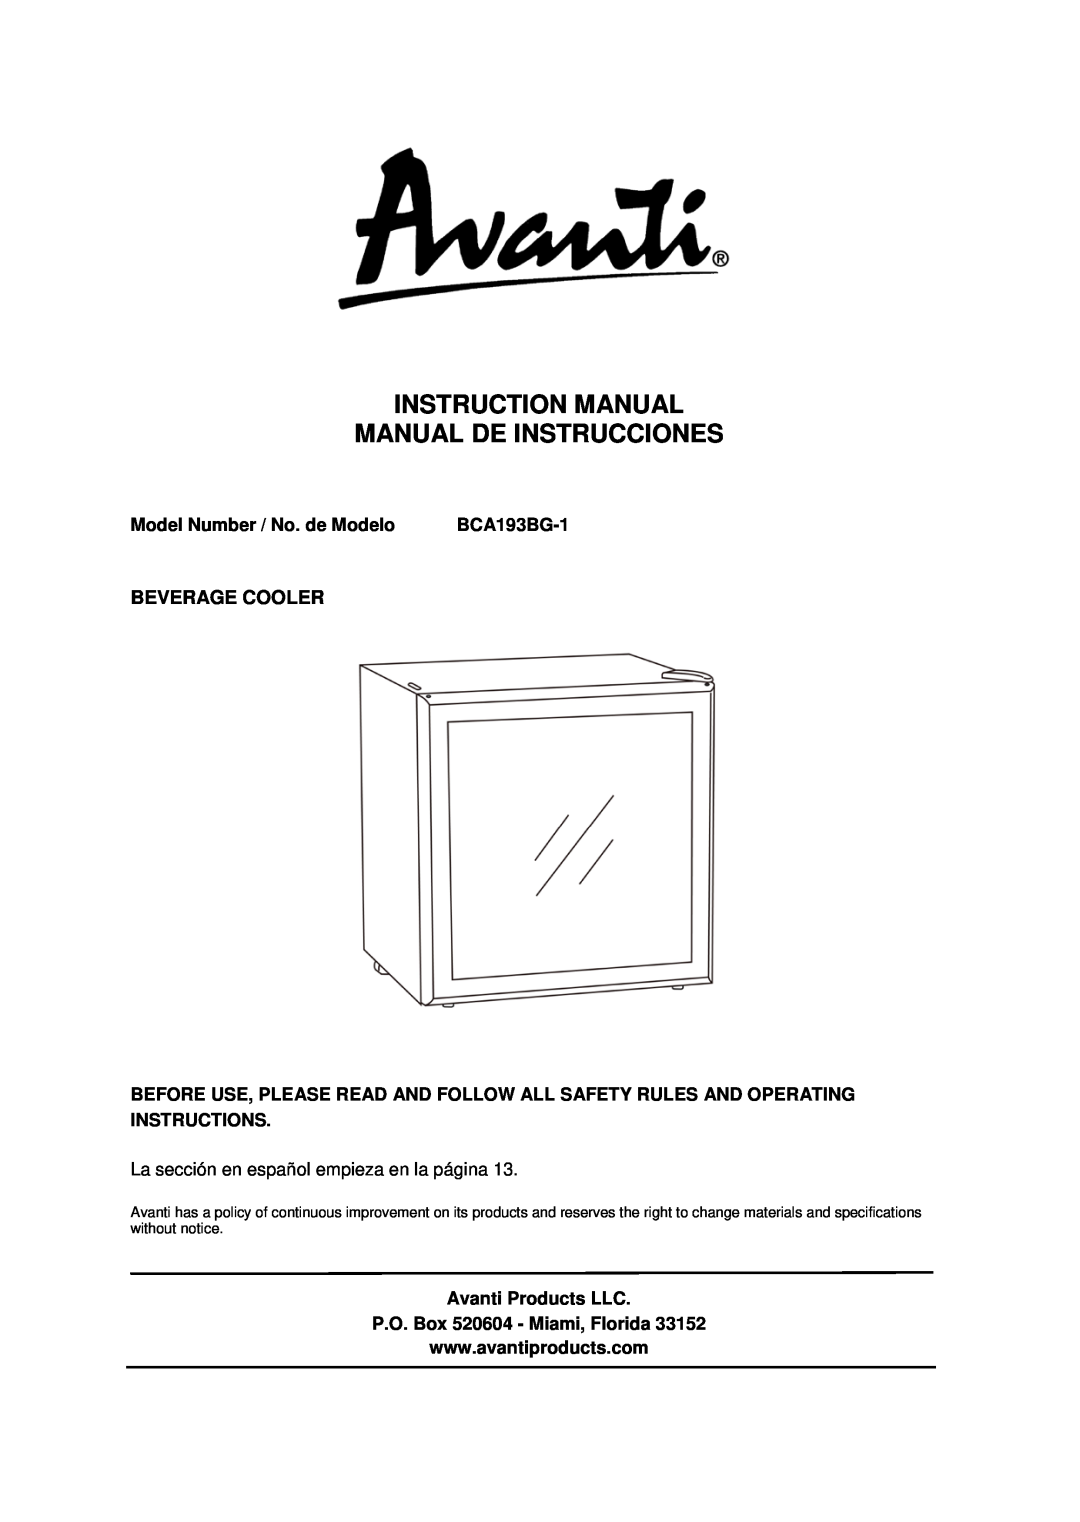 Avanti BCA193BG-1 instruction manual Beverage Cooler, Model Number / No. de Modelo, Avanti Products LLC 